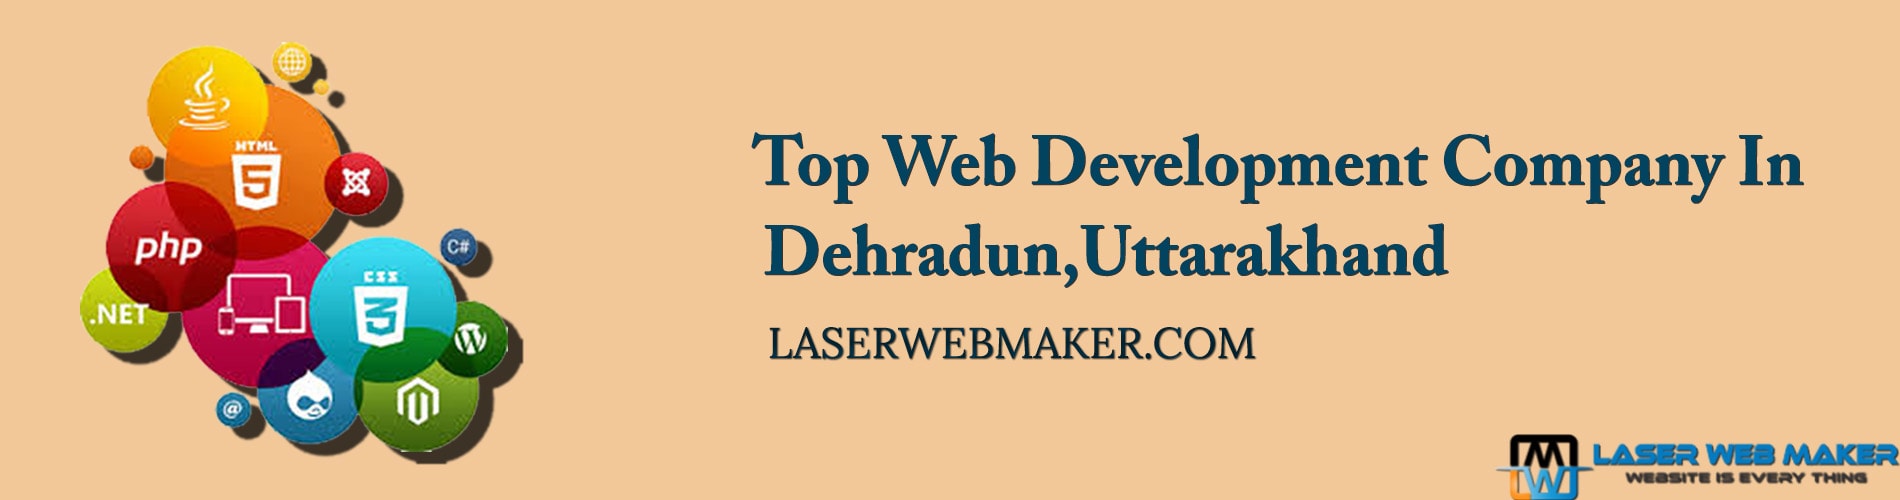 Top Web Development Company In Dehradun, Uttarakhand